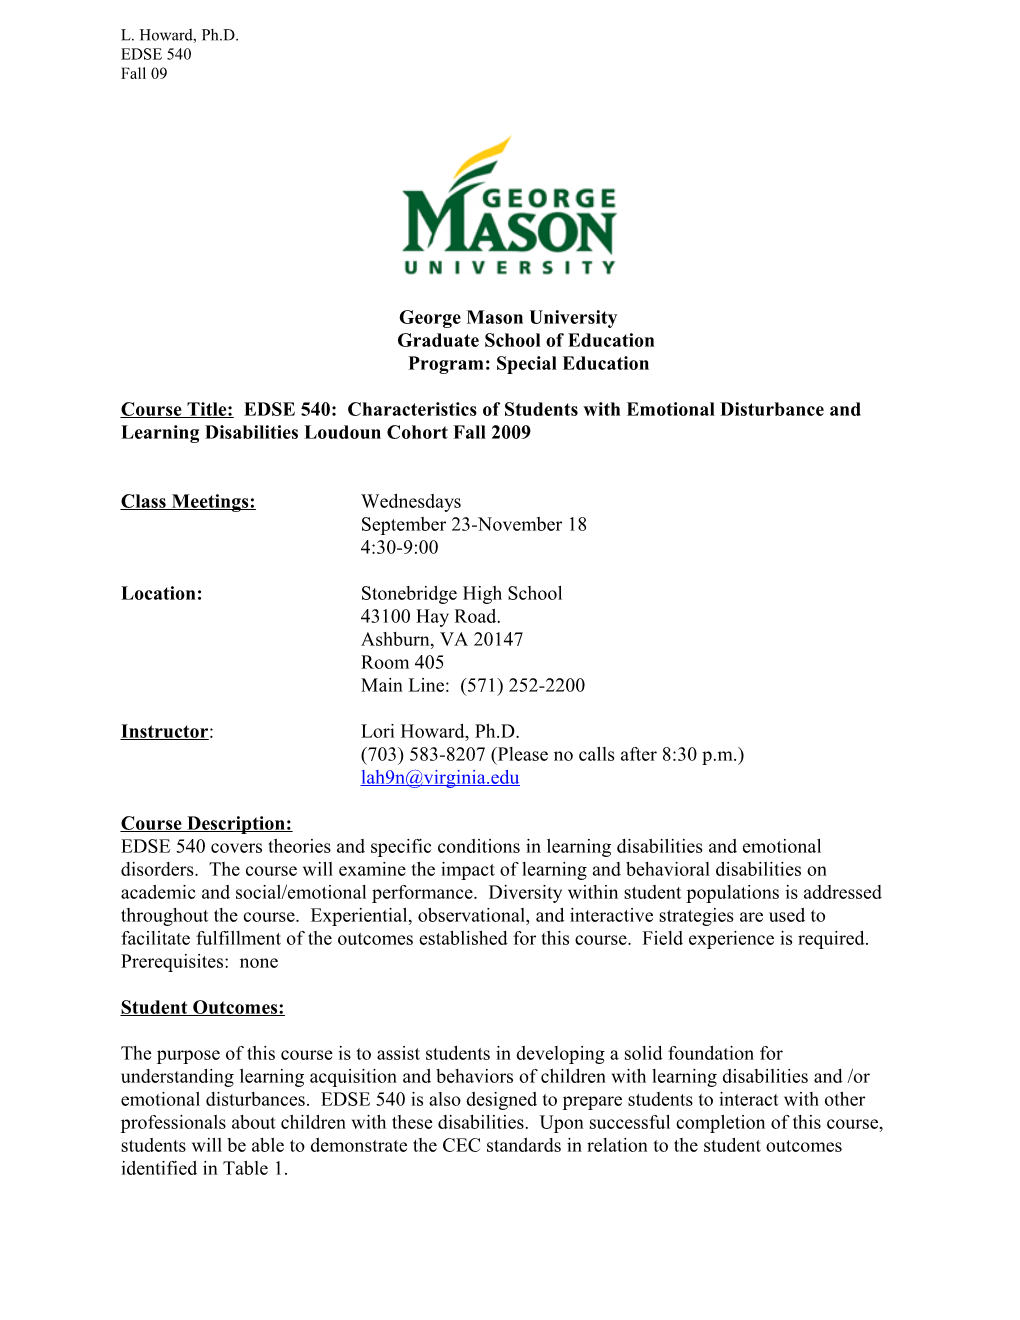 George Mason University Graduate School of Education Program: Special Education